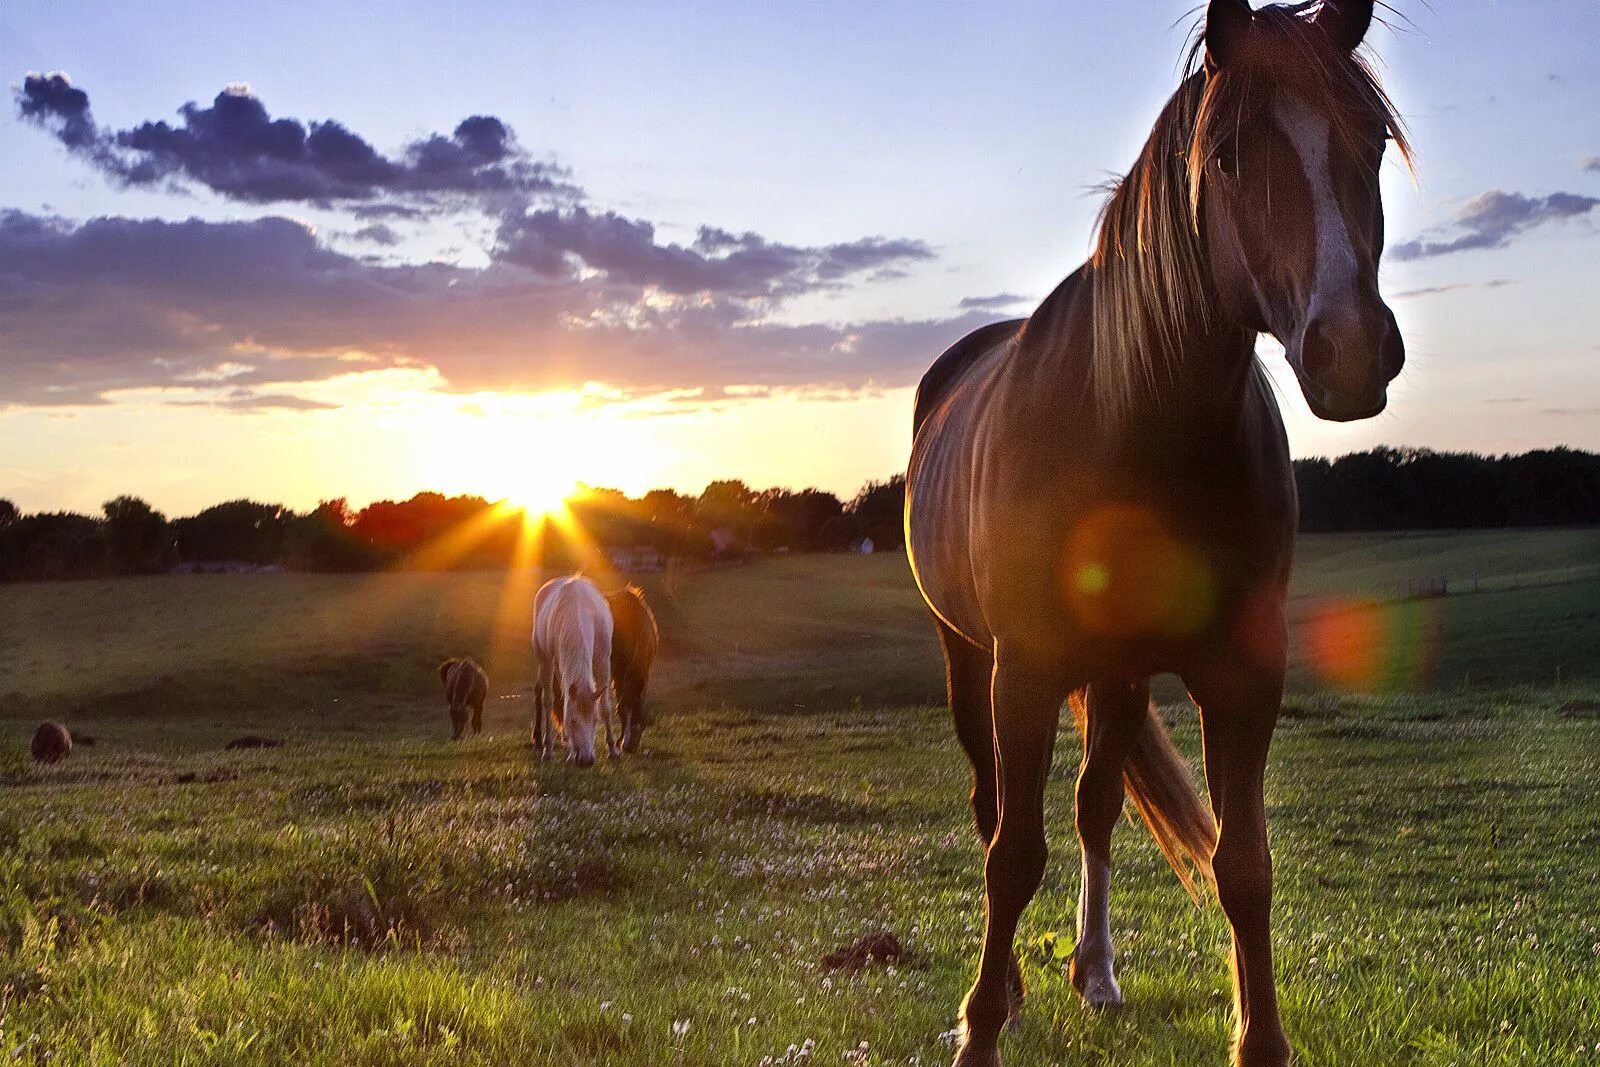 Horses are beautiful. Лошади на рассвете. Лошади на природе. Лошади в деревне. Красивые лошади.